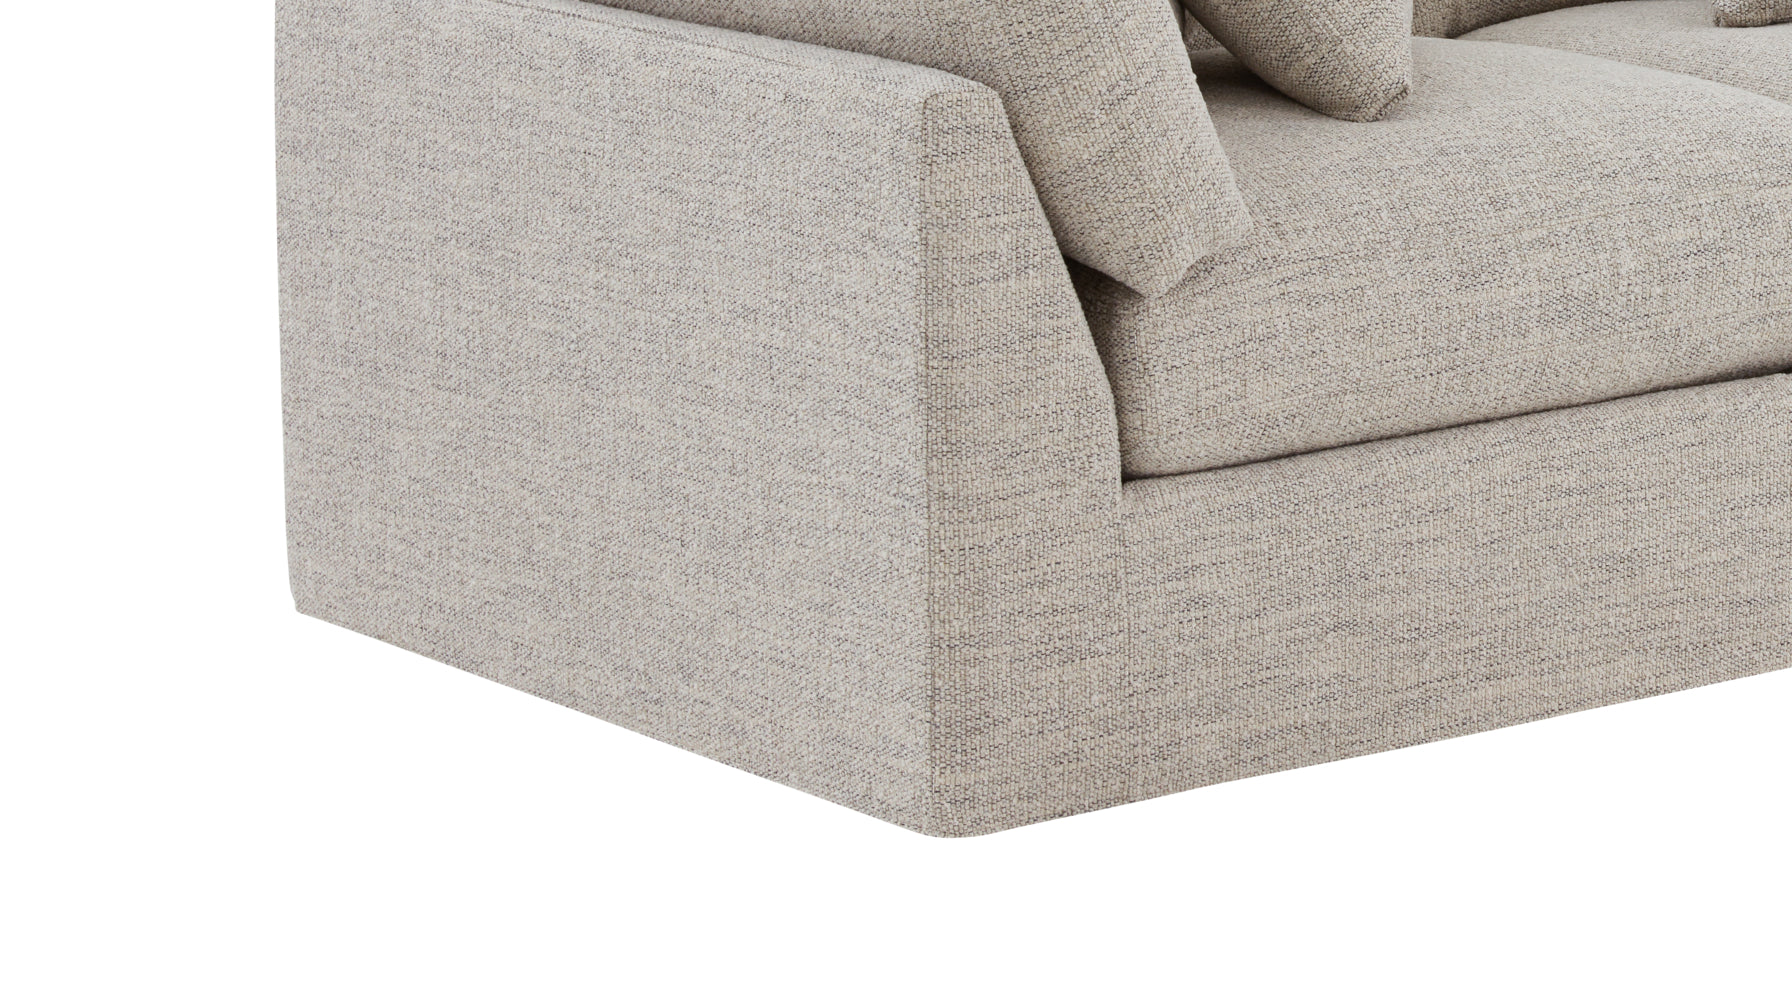 Get Together™ 2-Piece Modular Sofa, Large, Oatmeal - Image 9